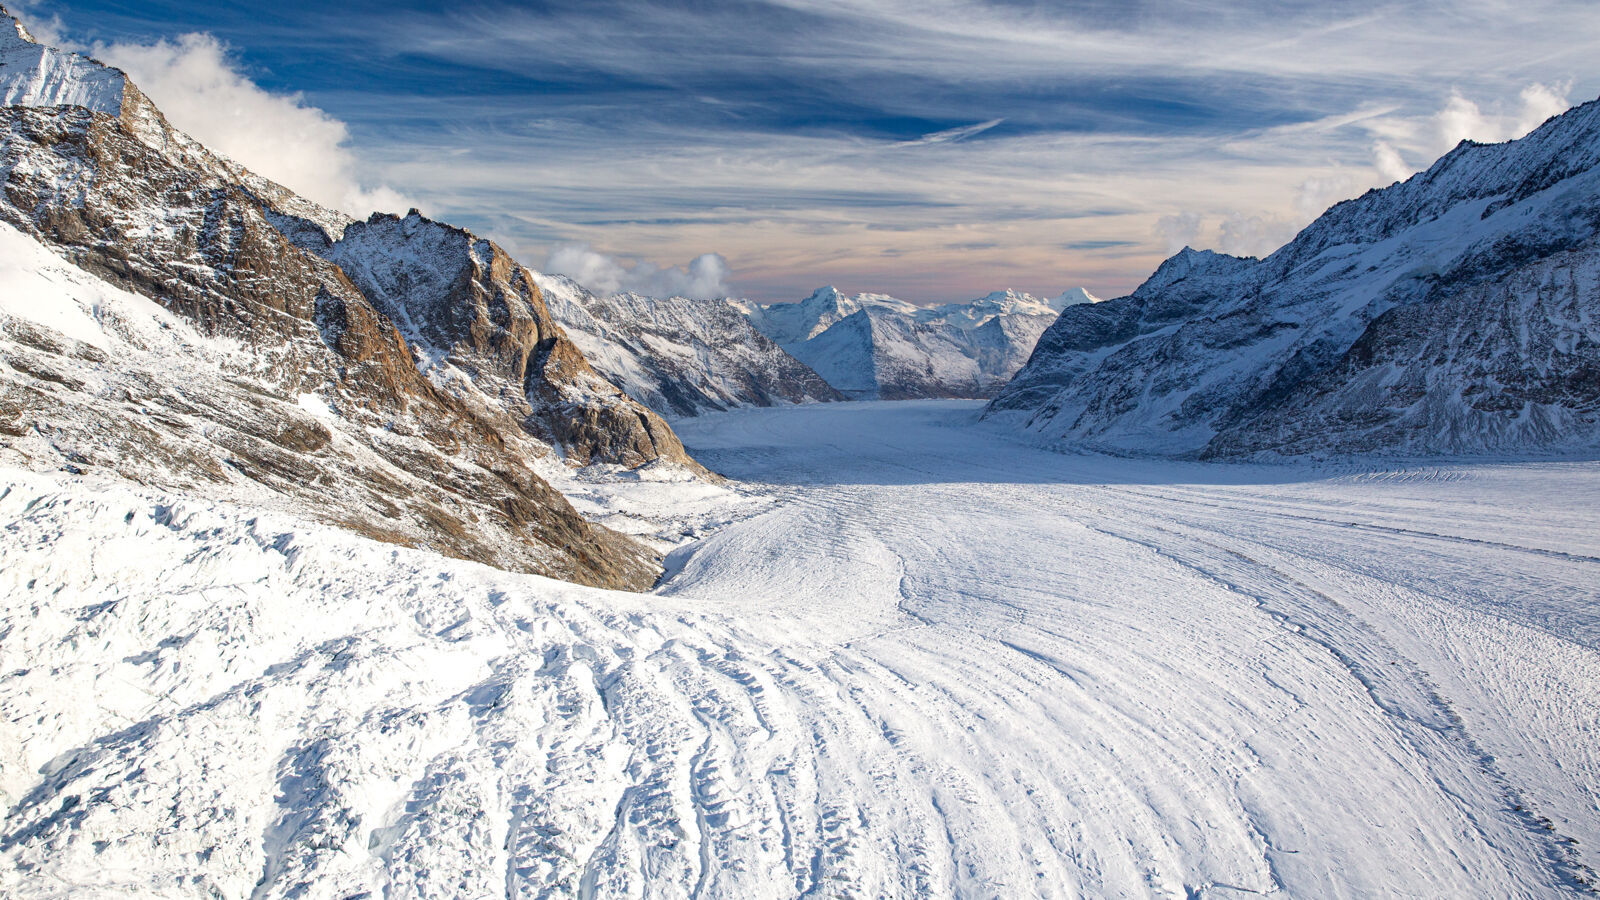 Ice flows of the Aletsch Glacier